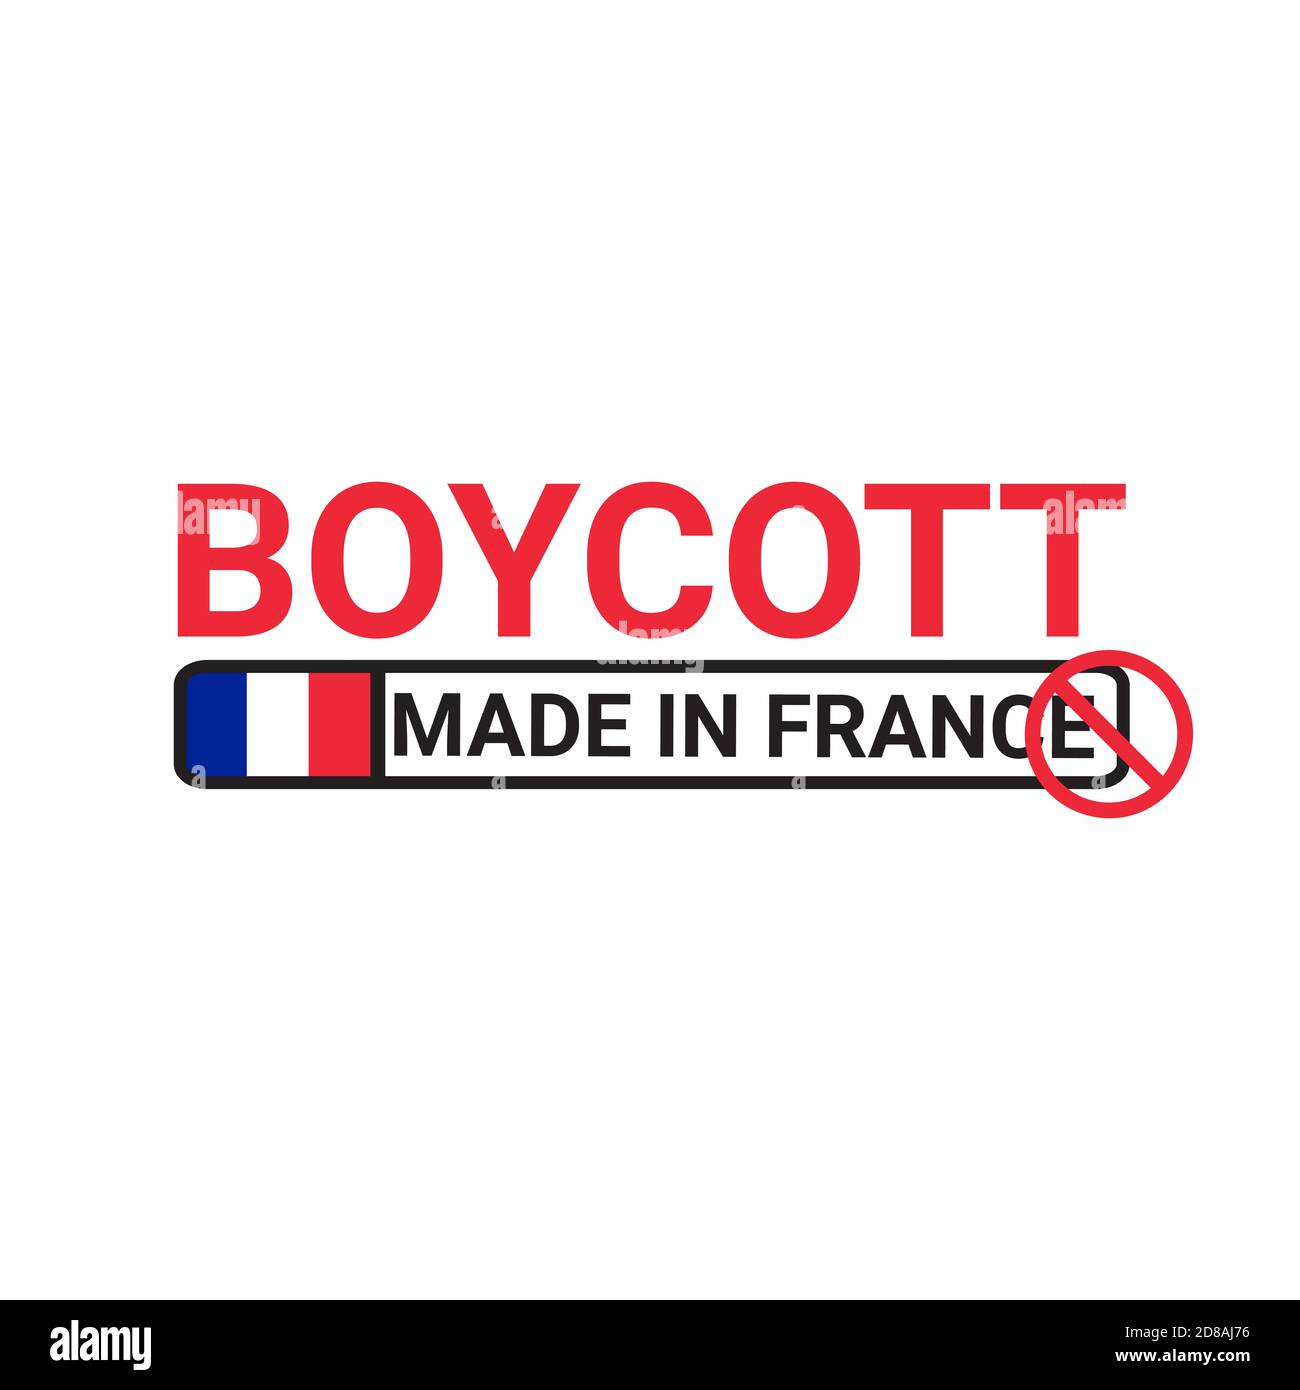 Boycott made in France - vector concept Stock Vector